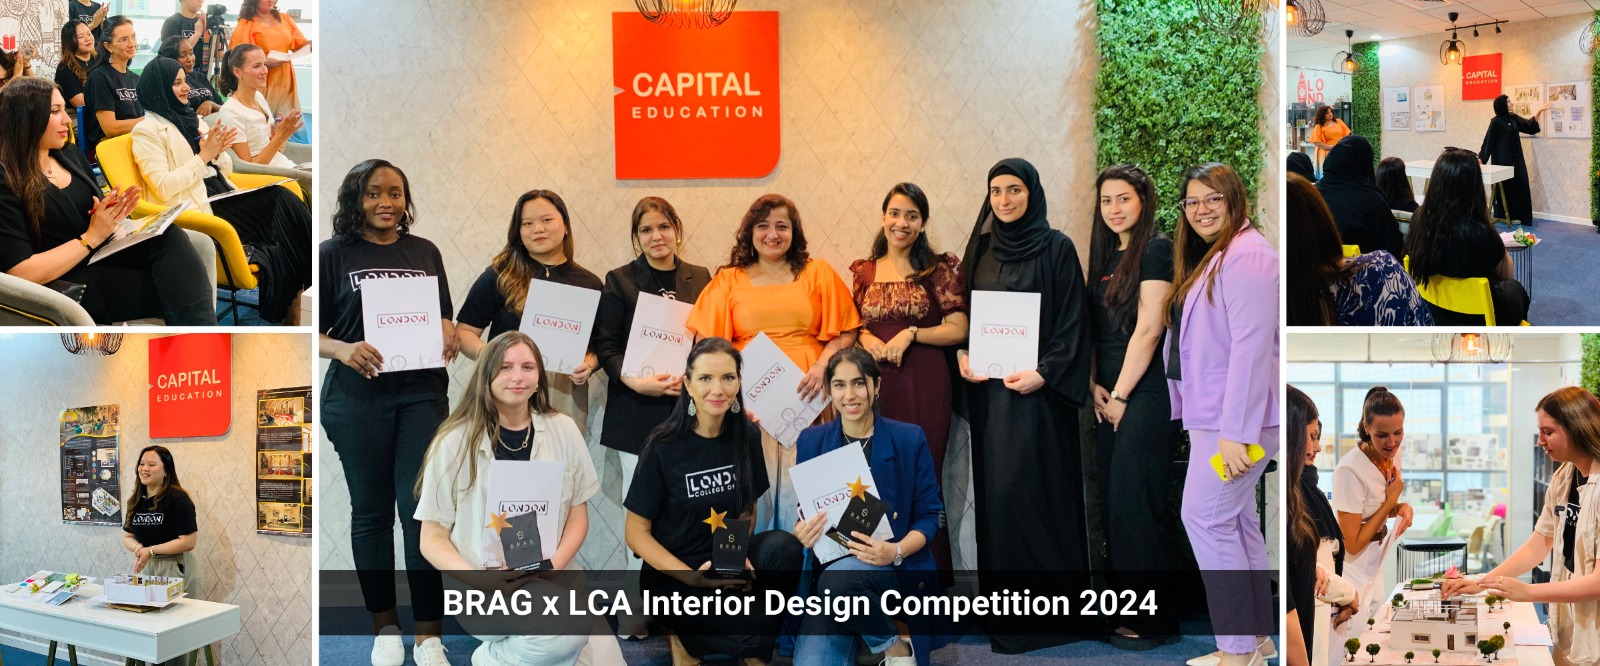 BRAG x LCA Interior Design Competition 2024